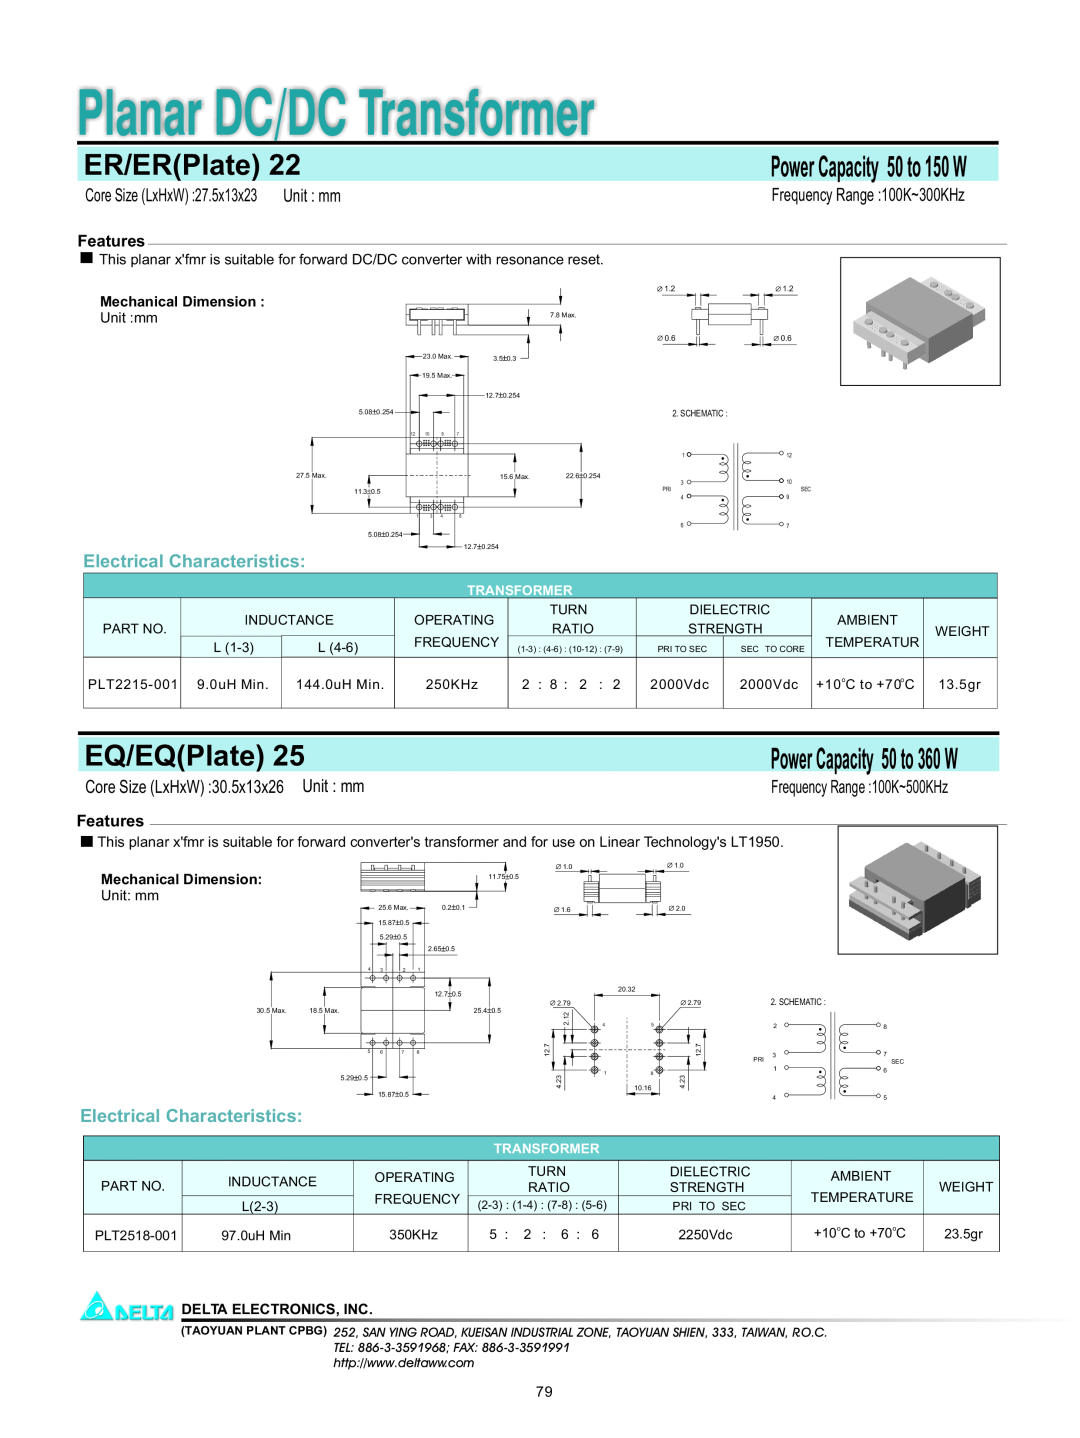 Delta Electronics ER/ER(Plate) 22 manual Planar DC/DC Transformer, ER/ERPlate, EQ/EQPlate, Electrical Characteristics 